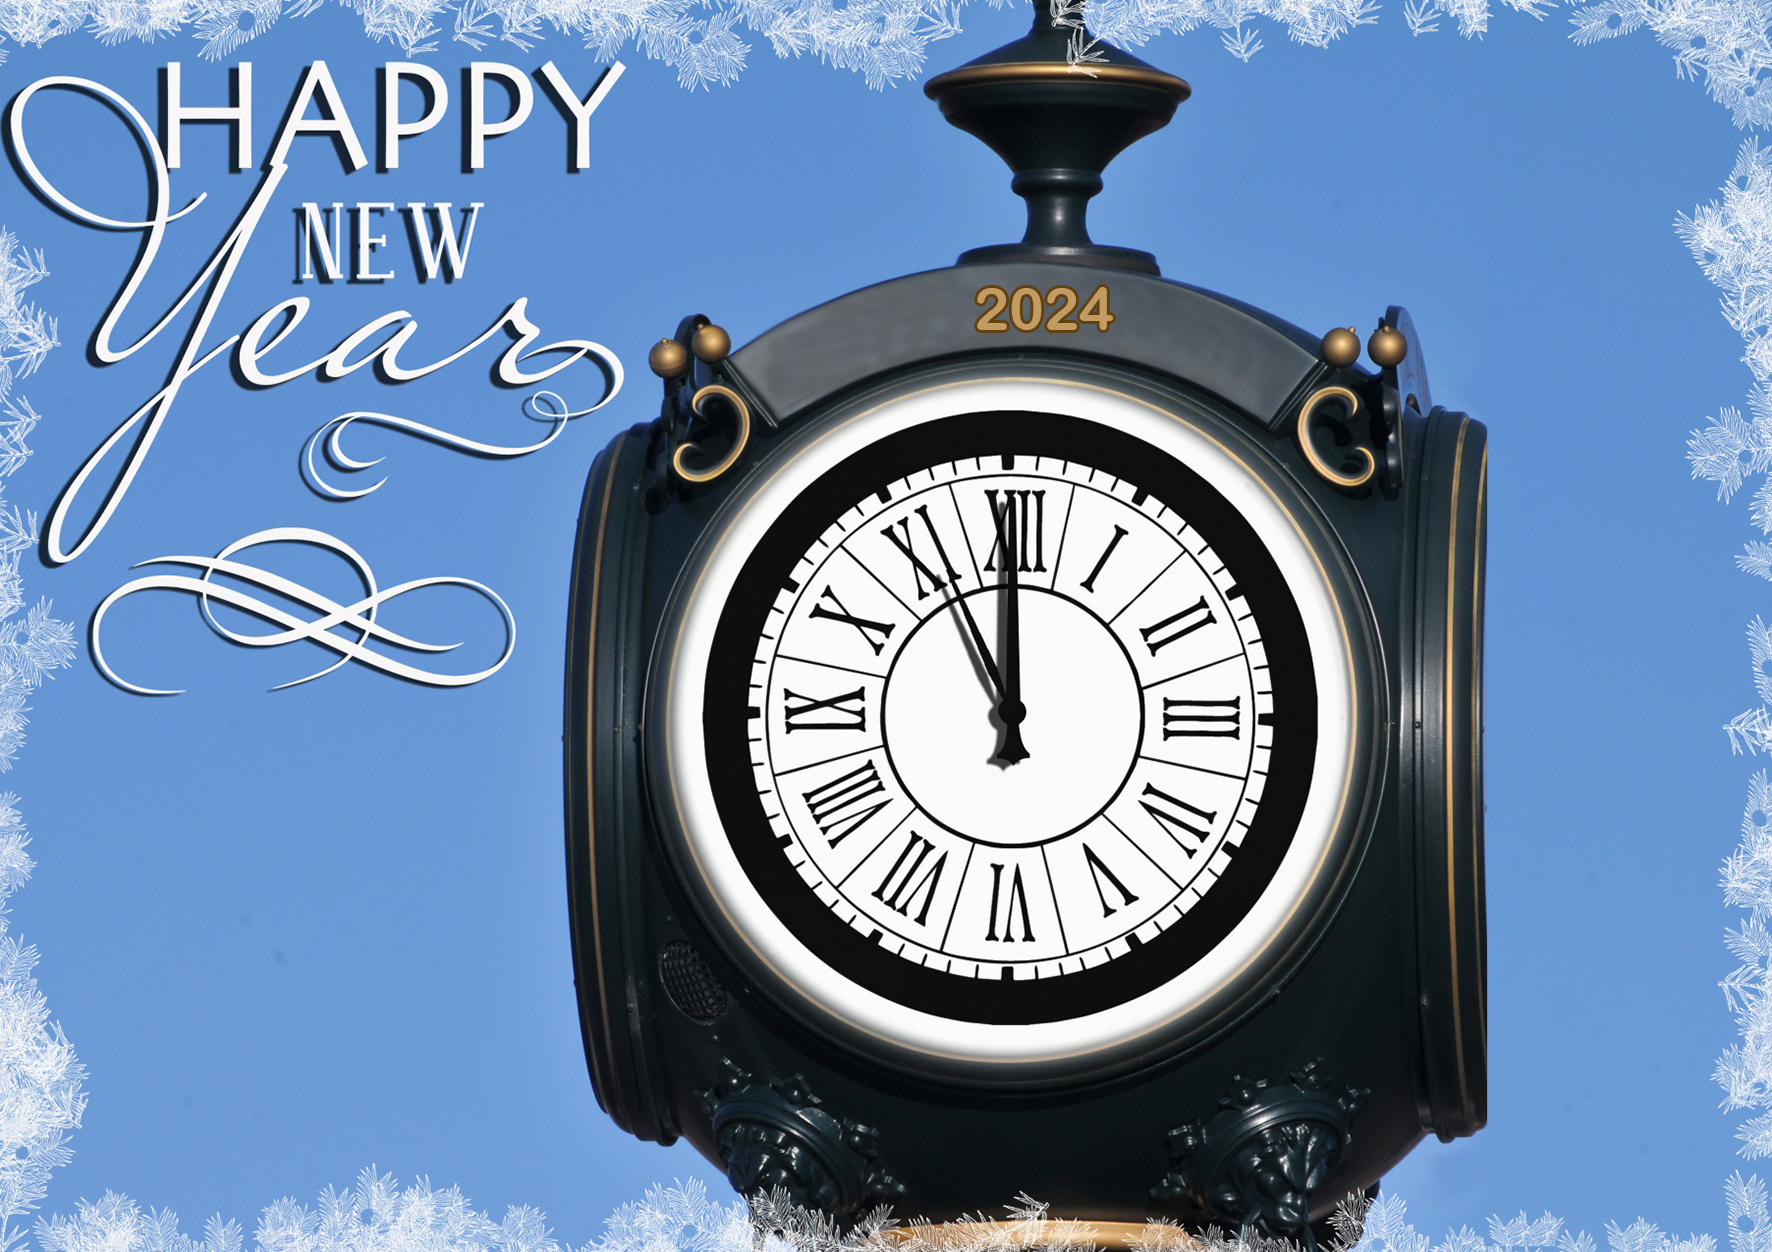 Vintage New Year clock greeting 2019